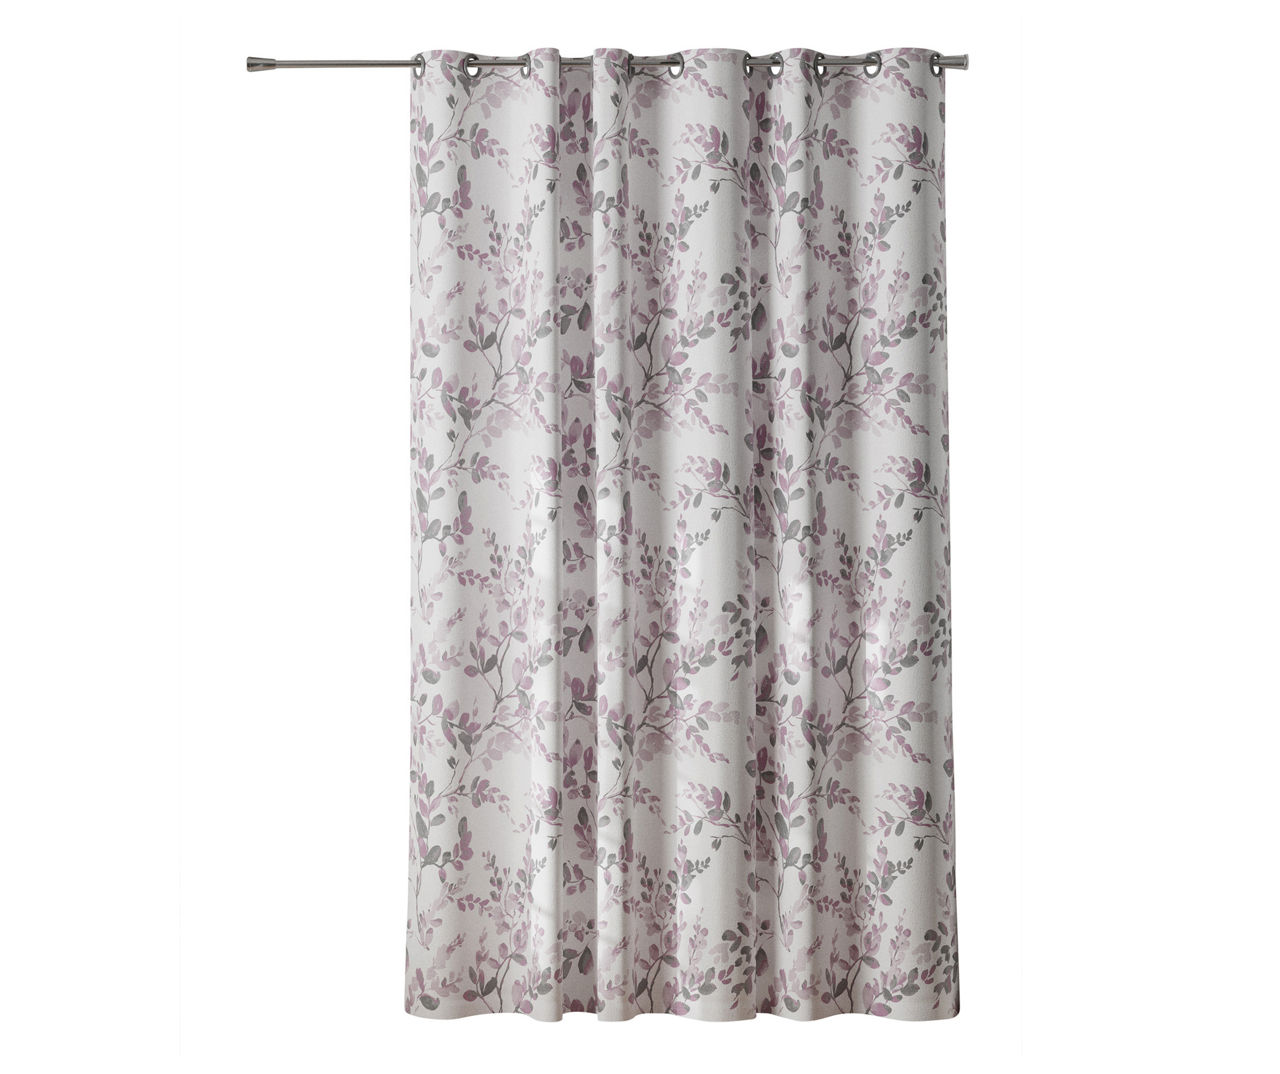 18 pc Animal Print Shower Curtain and Bath Mat set